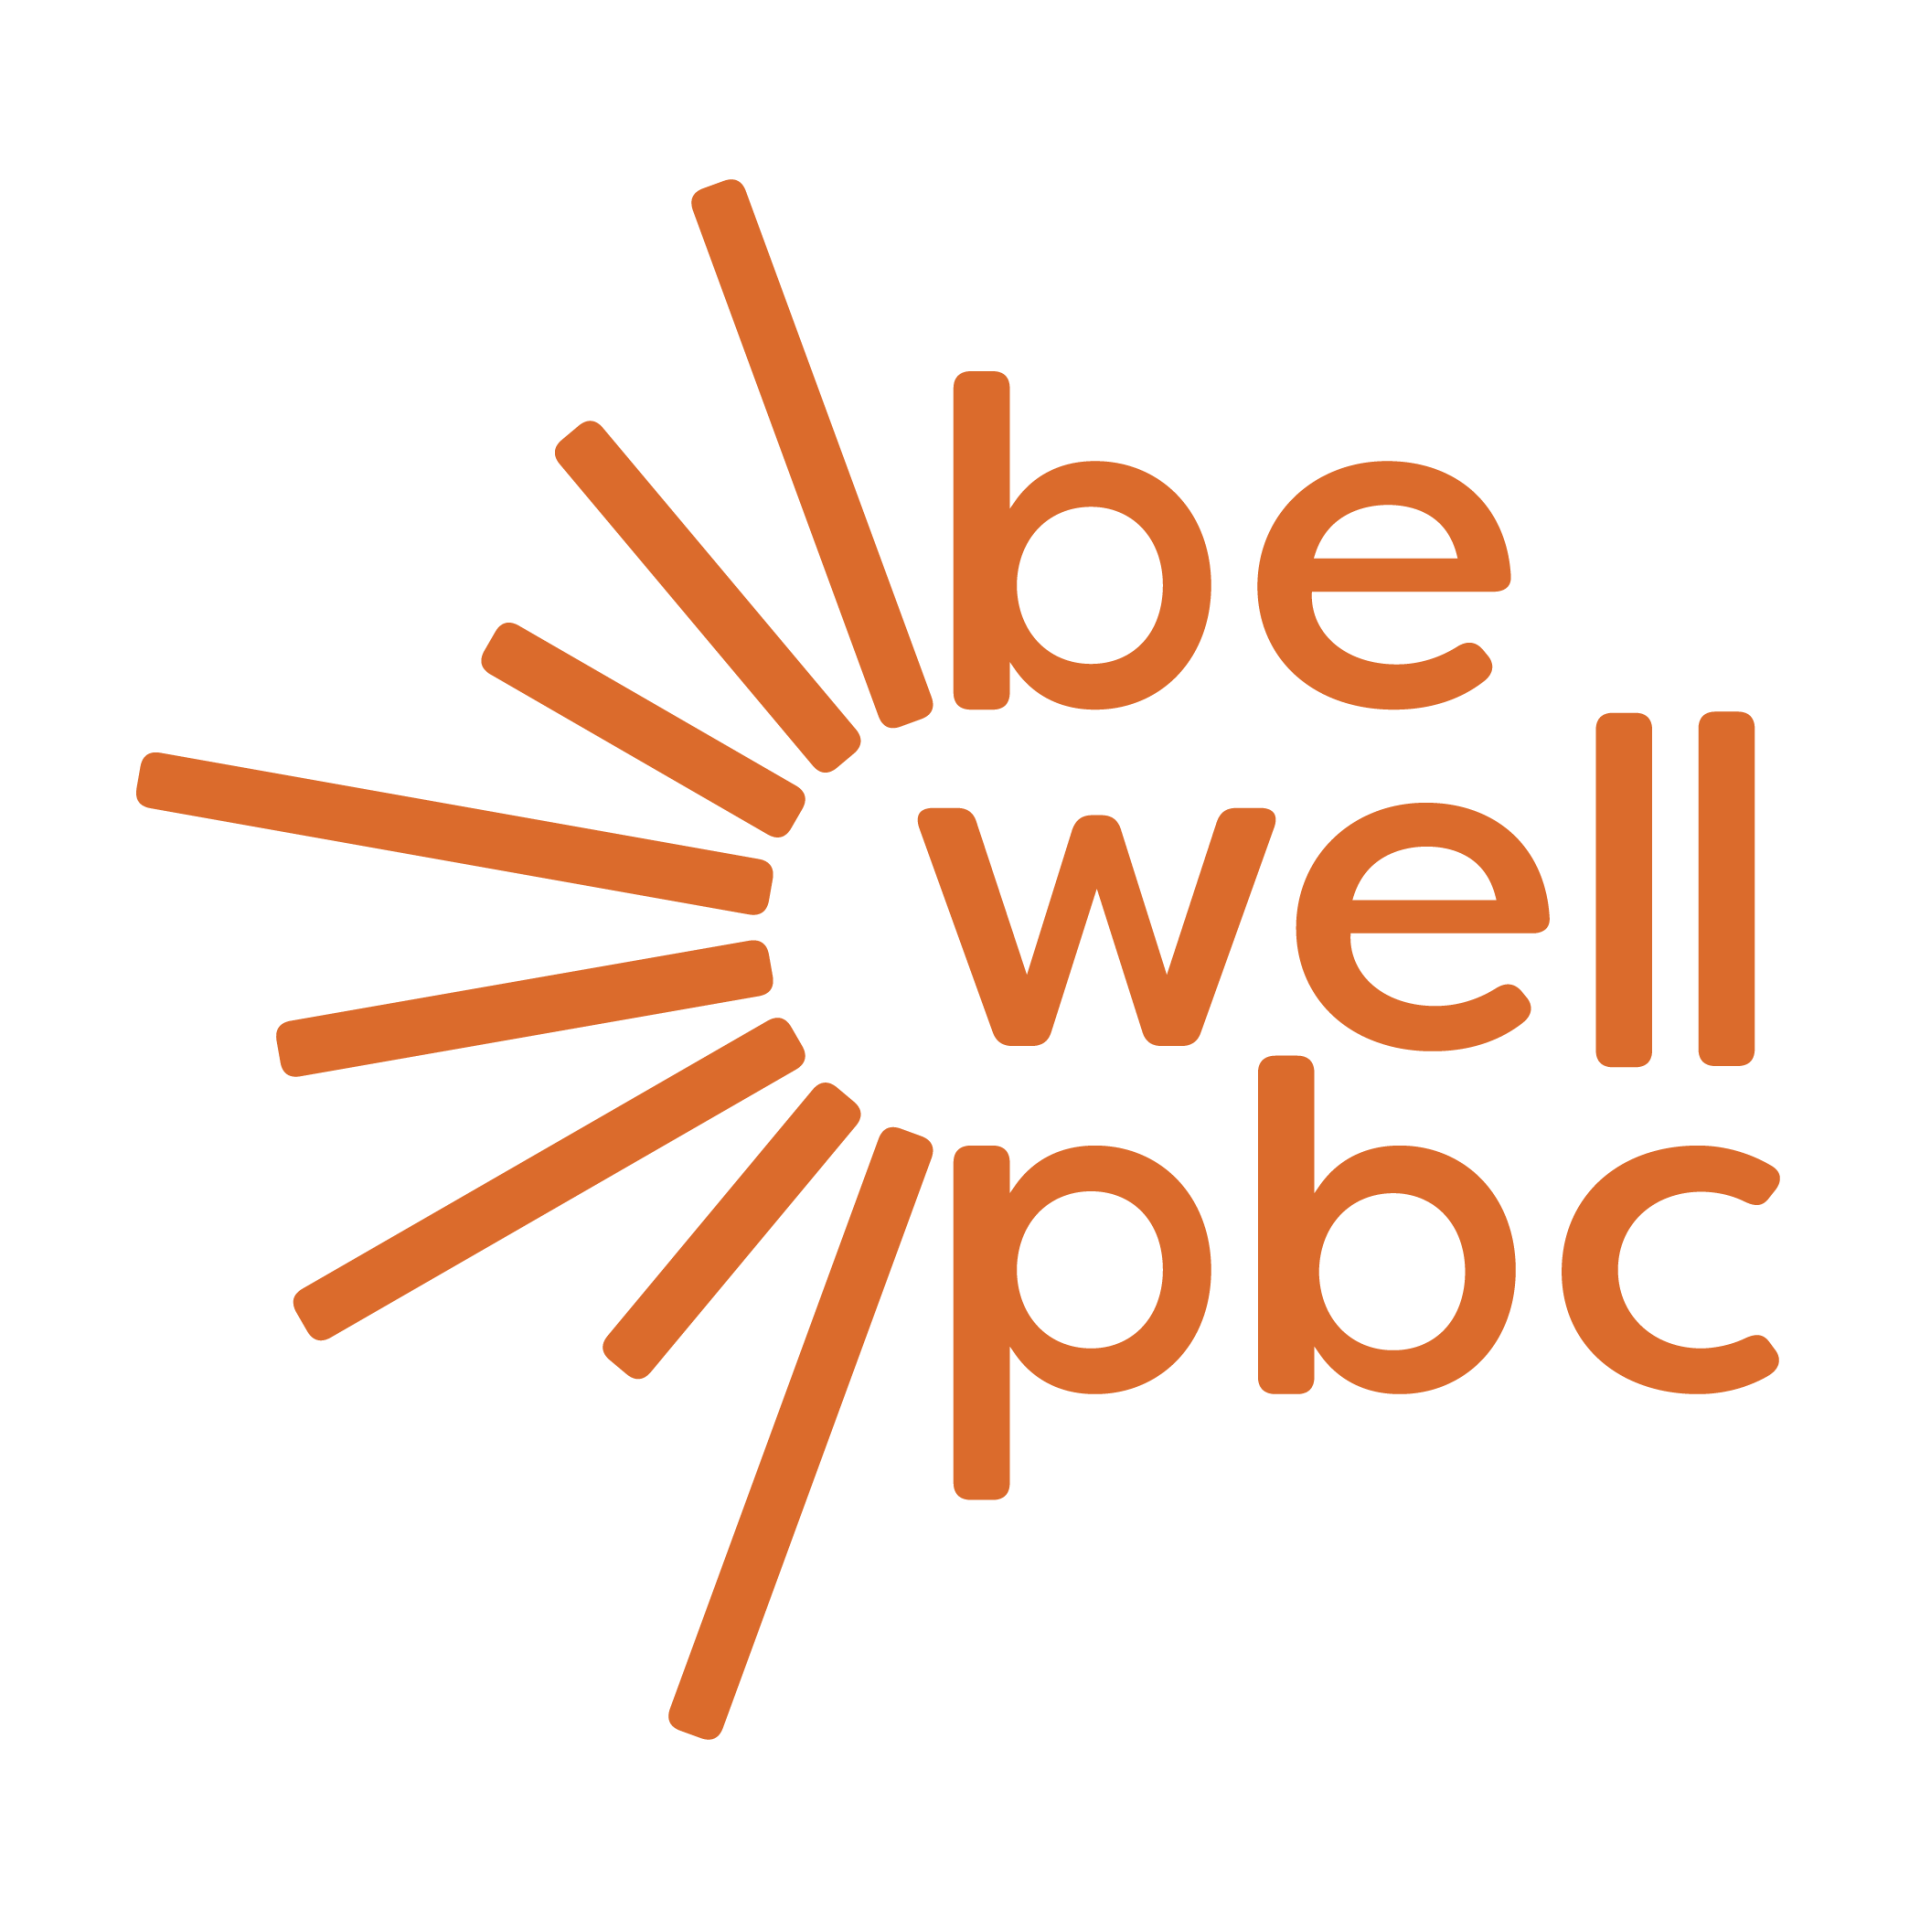 be well pbc logo